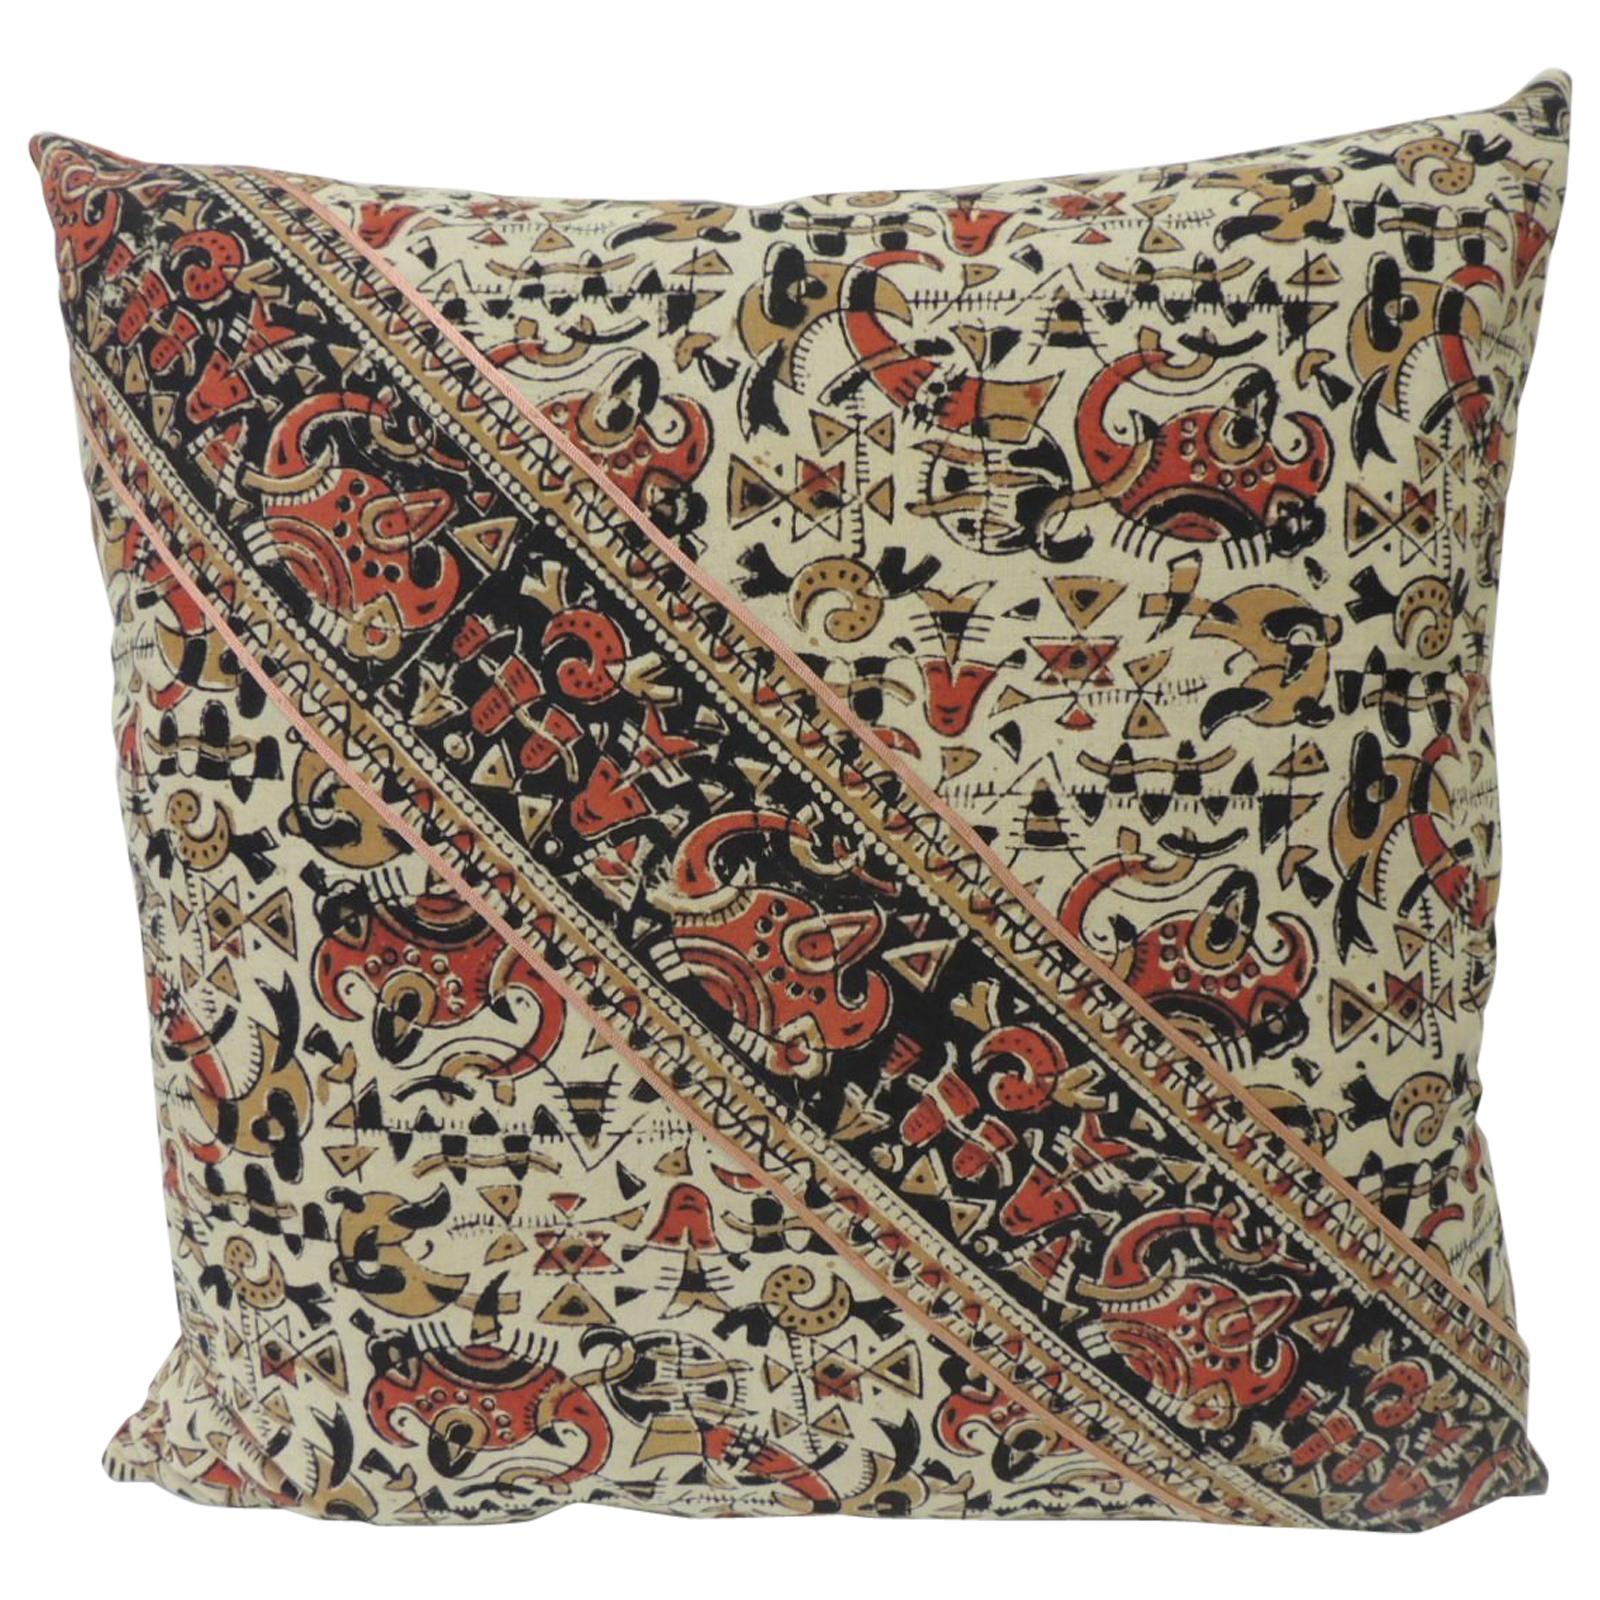 Vintage Persian Hand-Blocked Kalamkari Square Throw Pillow